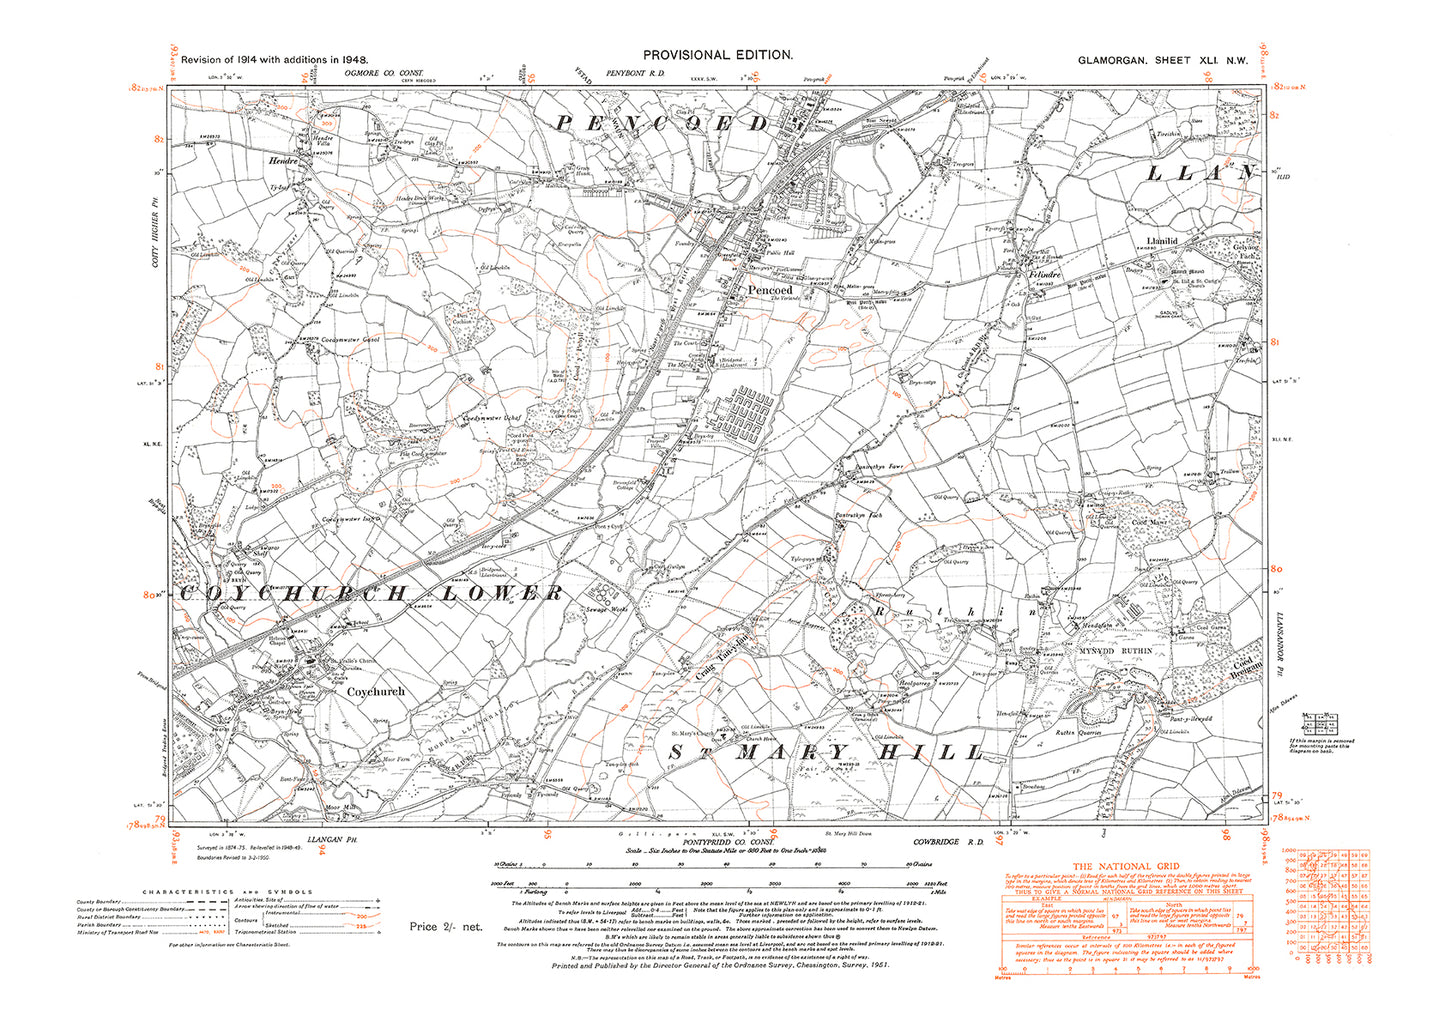 Pencoed, Coychurch, Felindre, old map Glamorgan 1948: 41NW